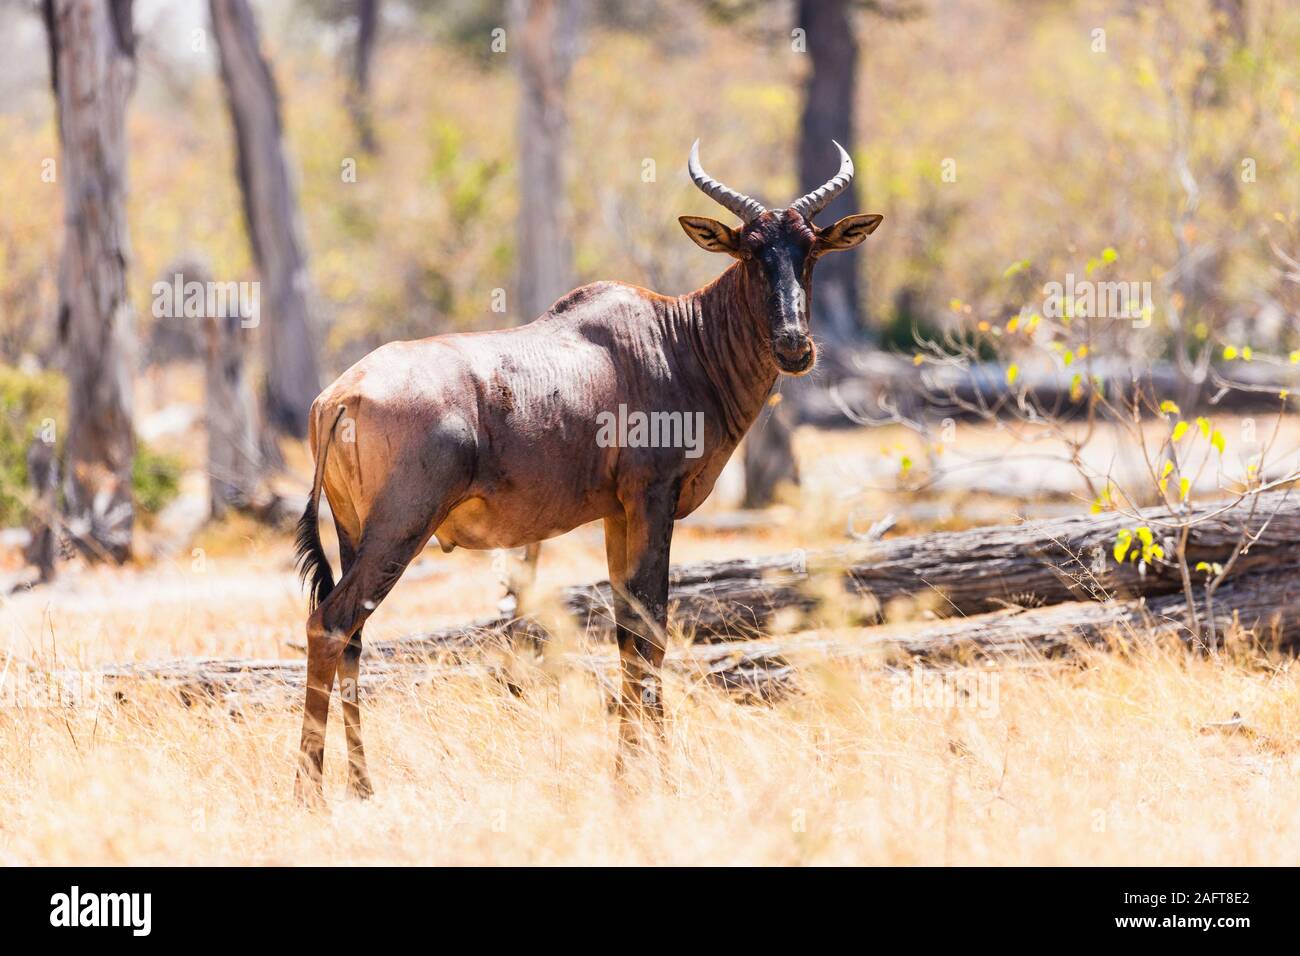 Topi standing on savannah, Moremi game reserve, Okavango delta, Botswana, Africa Stock Photo